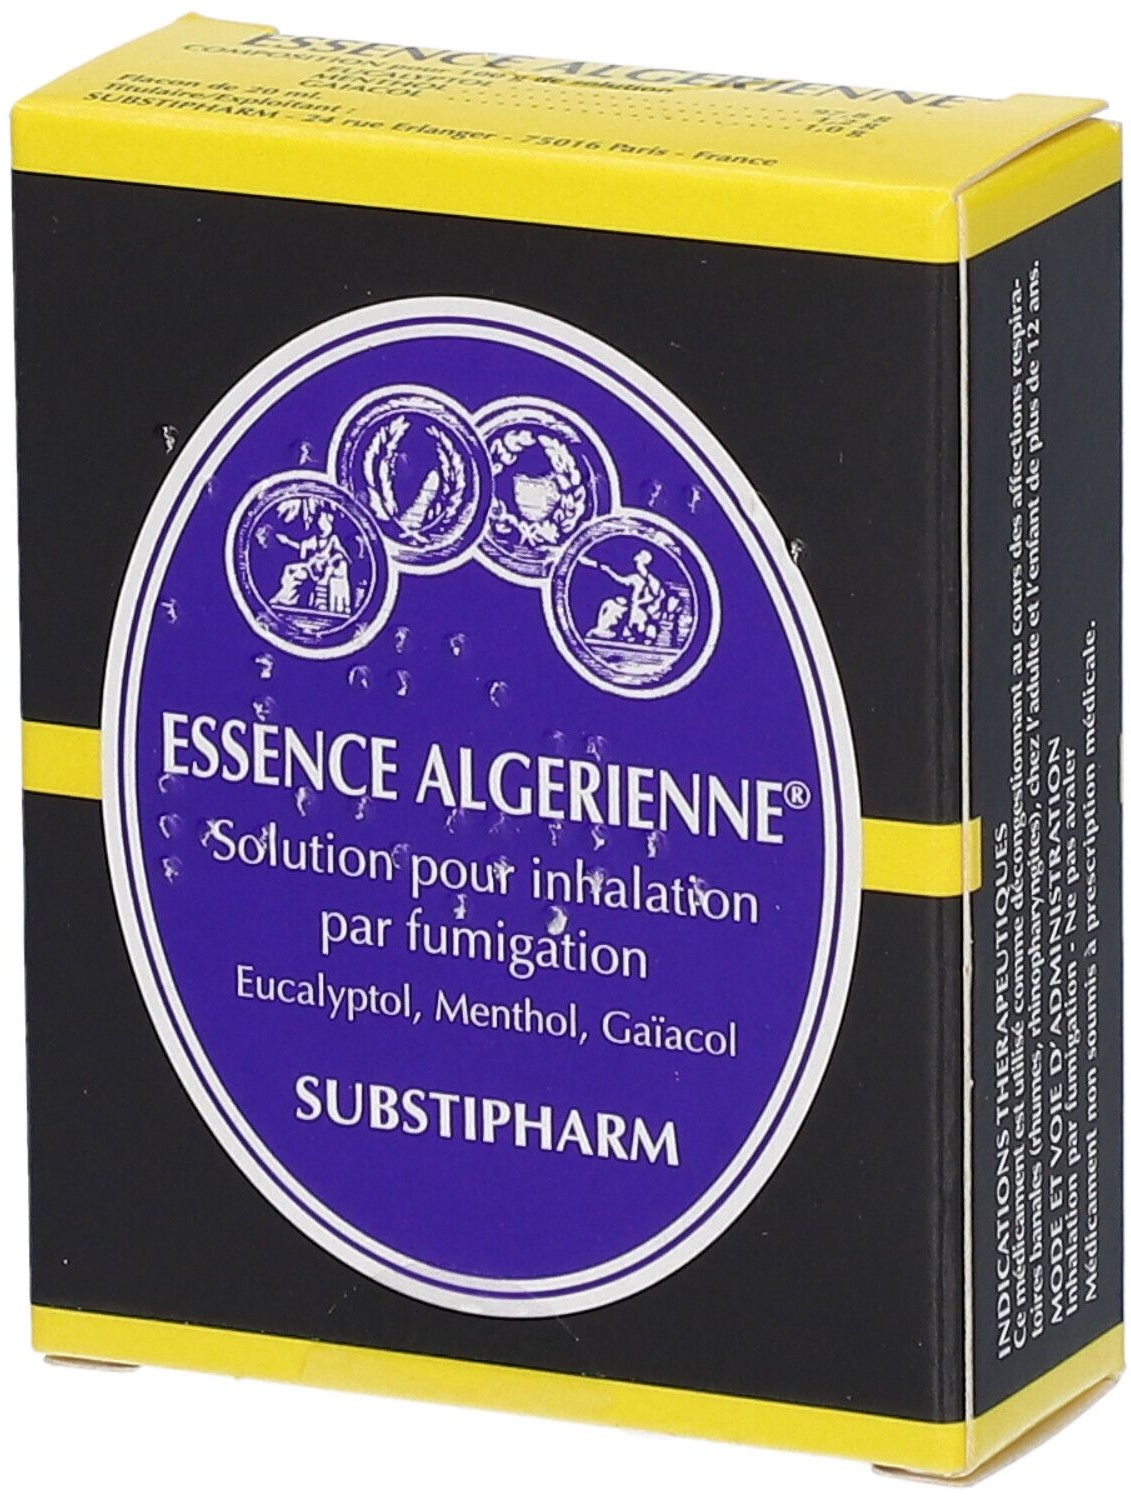 Essence Algerienne® 20 ml solution